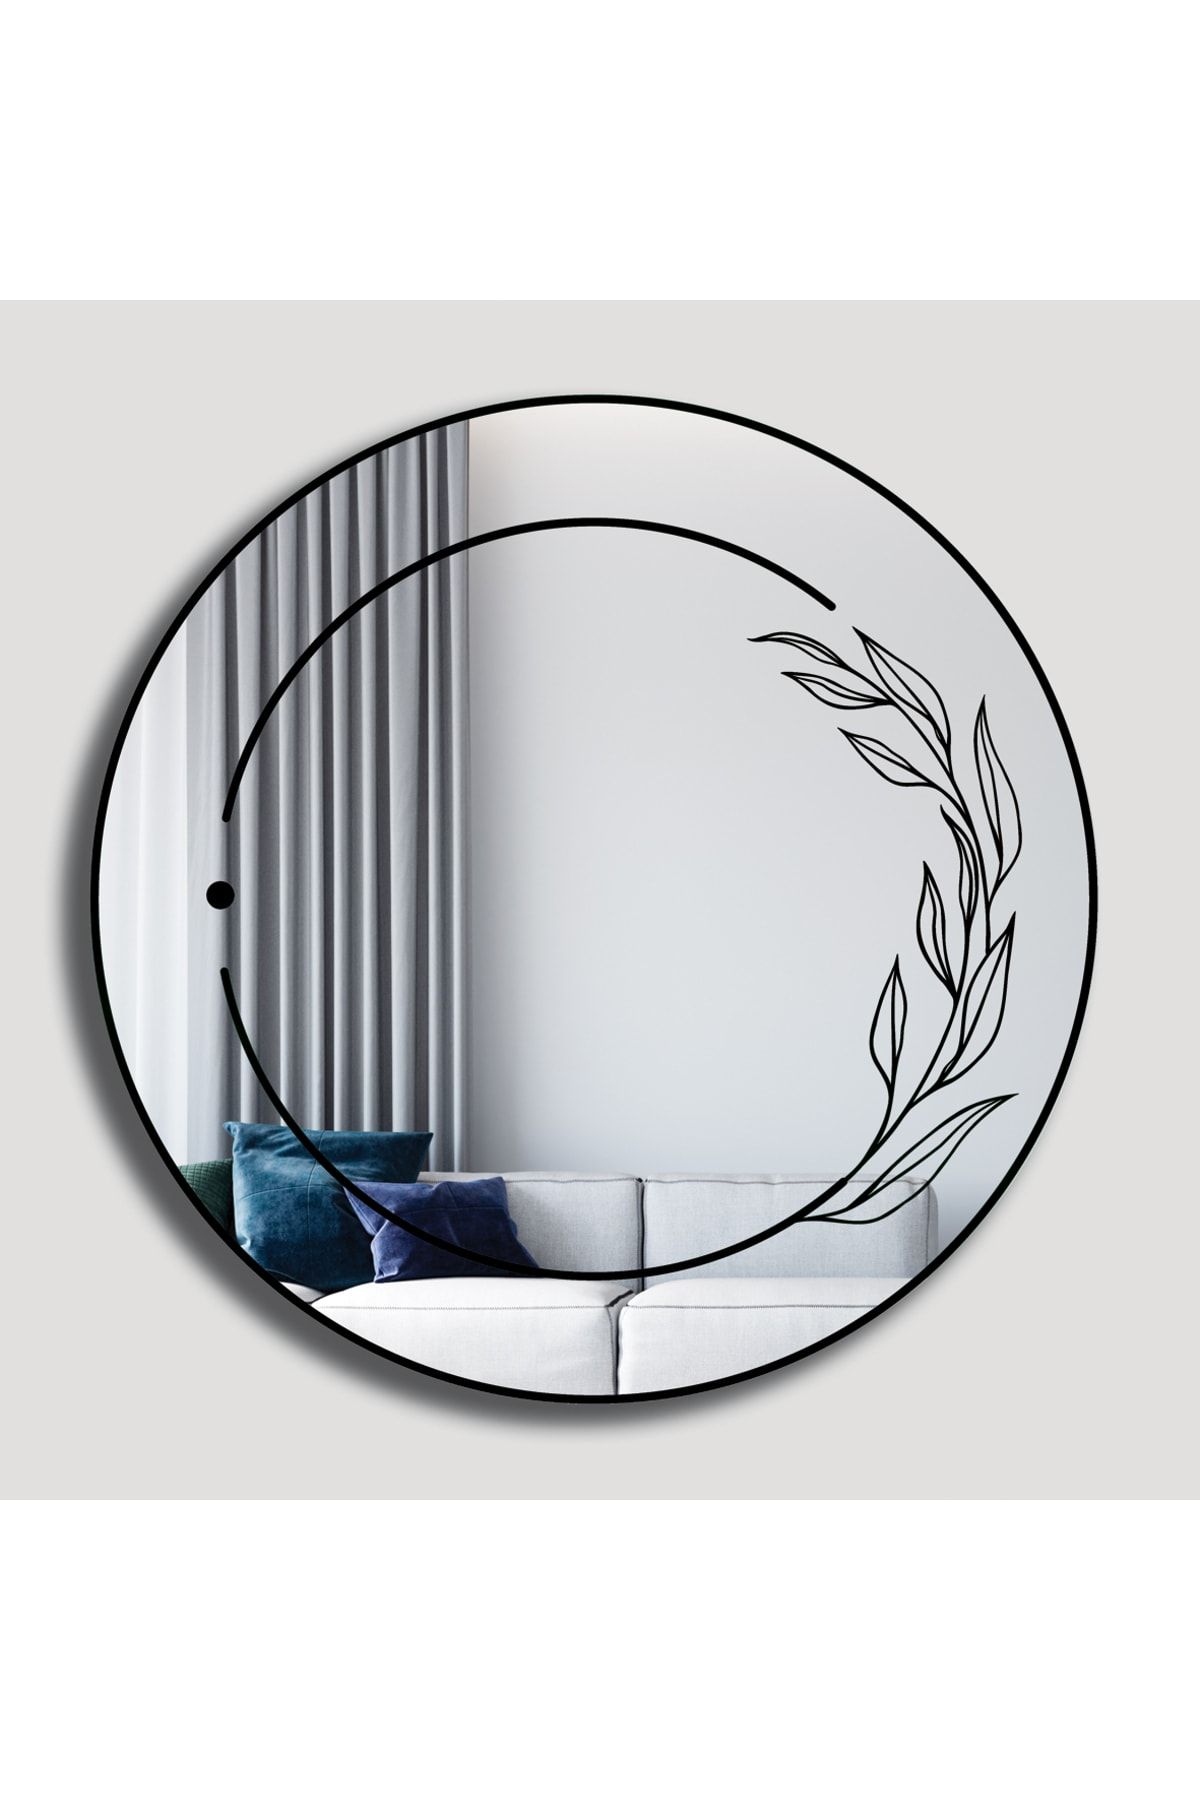 Alfista Art 50cm Dekoratif Desenli Yuvarlak Konsol Dresuar Banyo Aynası Imza Modeli